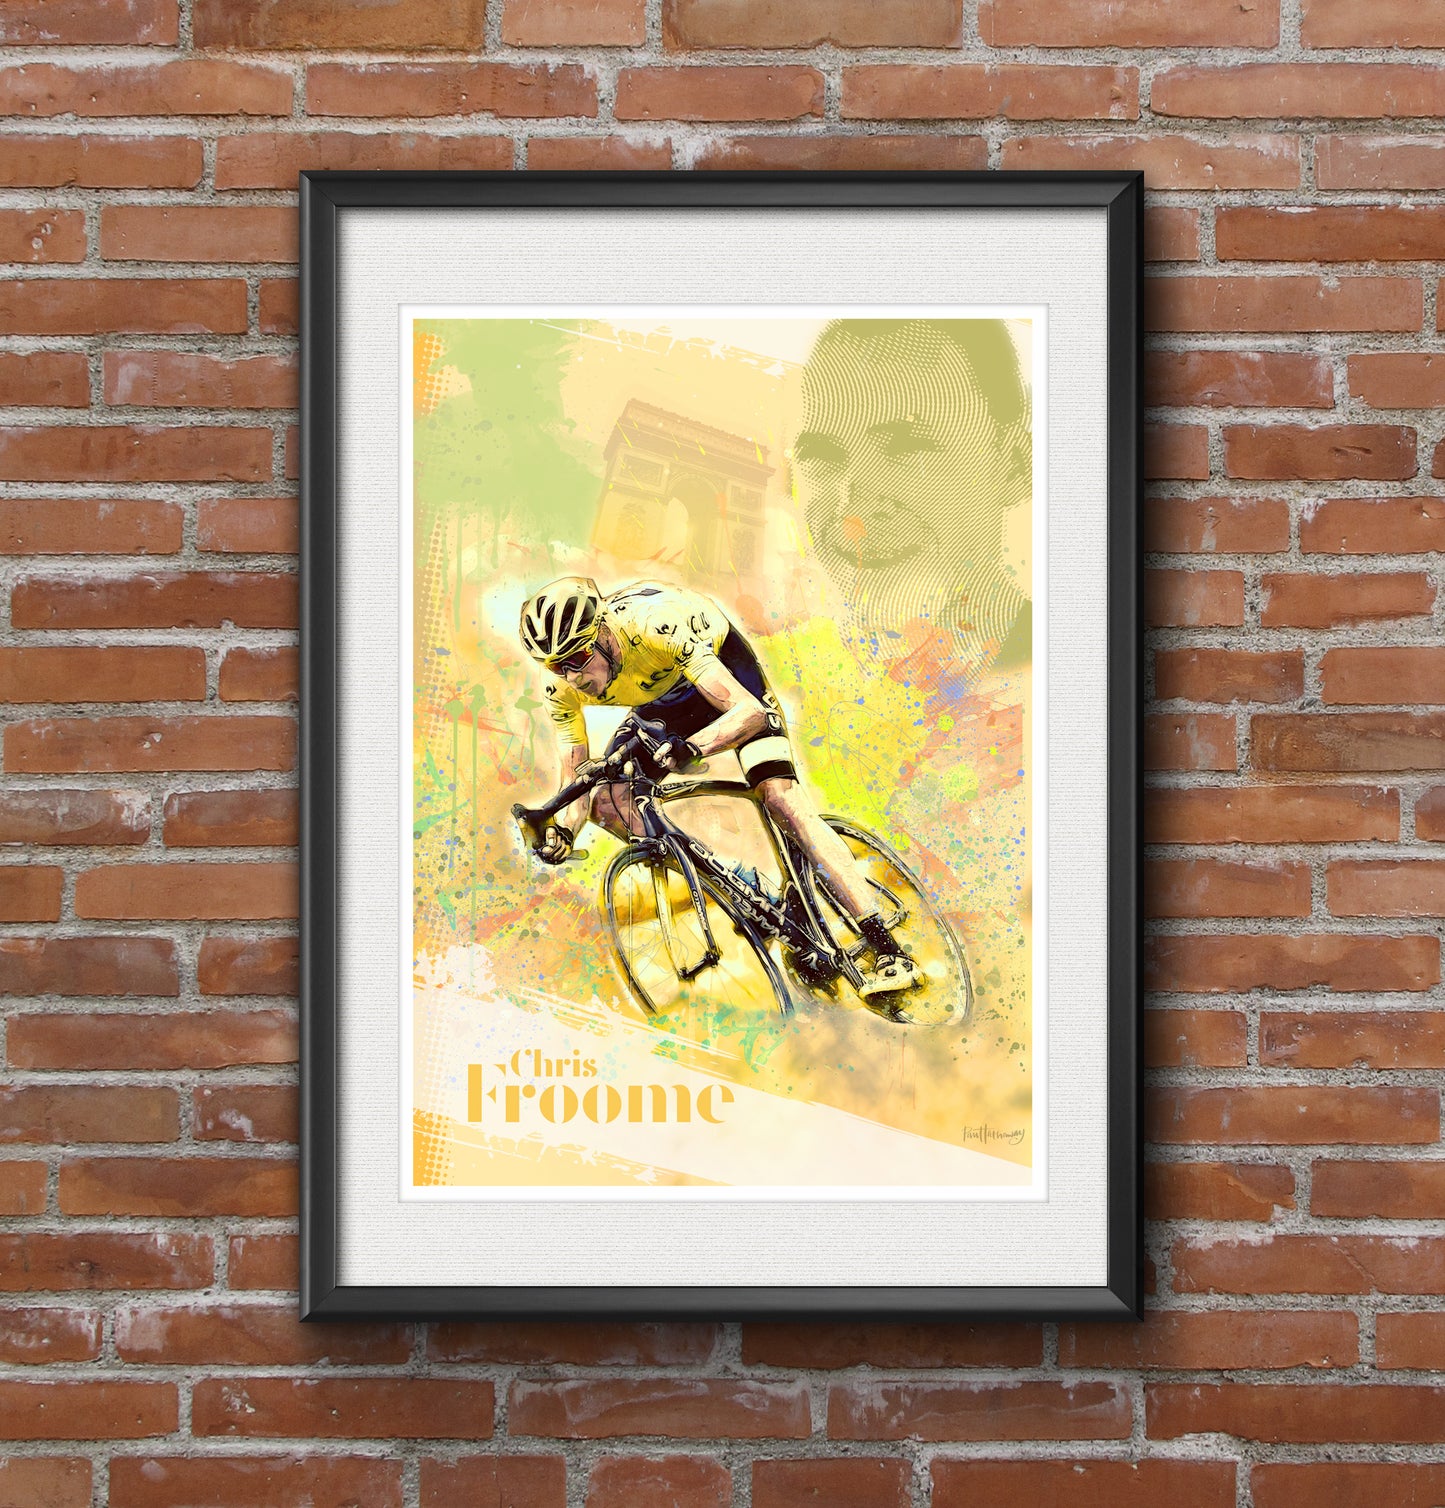 Chris Froome - Cycling Art Print - Option 1